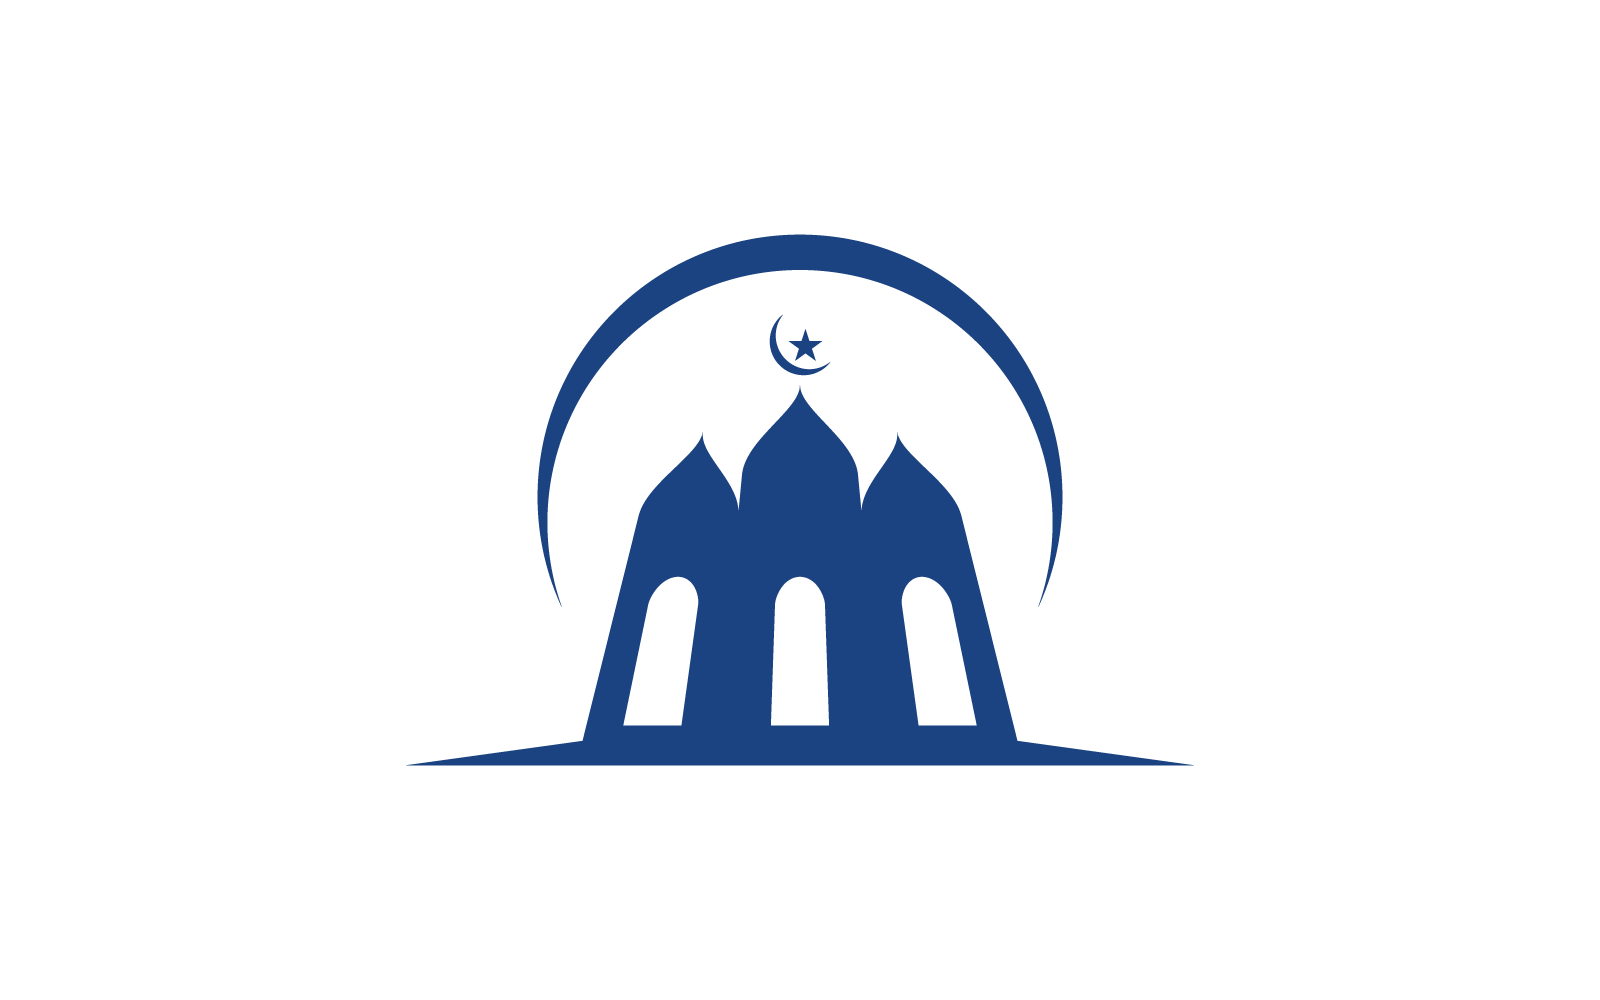 Islamic, Mosque,ramadhan kareem logo design